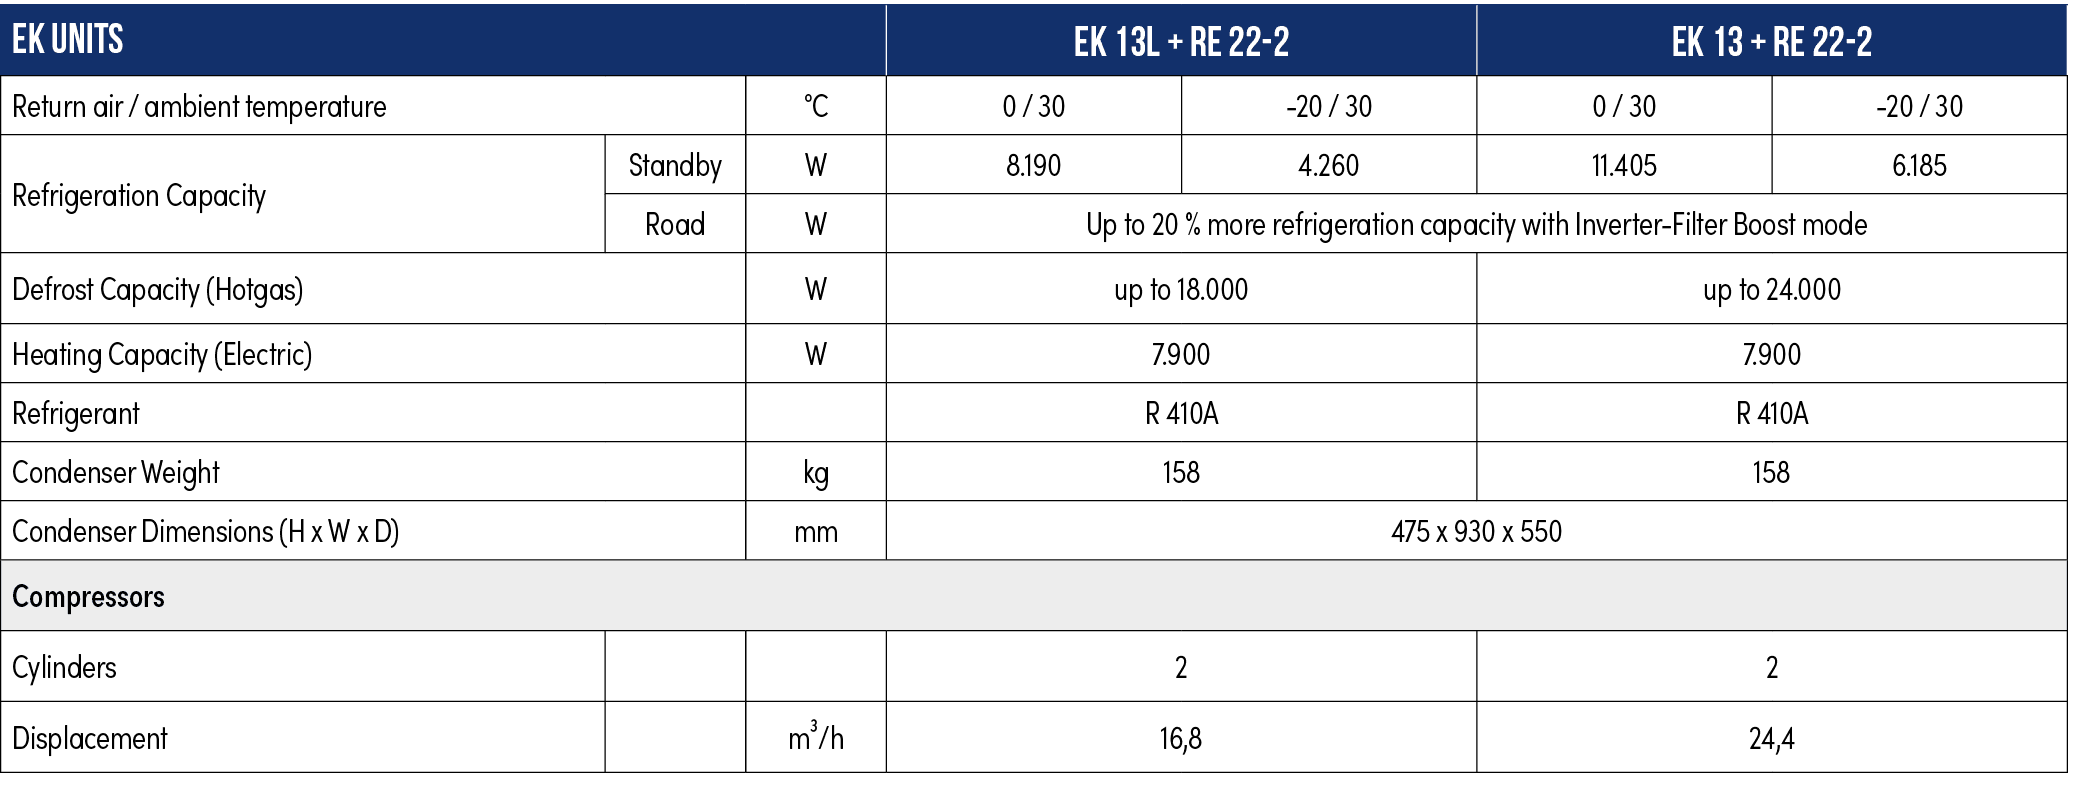 EK units,EK 13L + RE 22-2,EK 13 + RE 22-2,Return air / ambient temperature,°C,0 / 30 ,-20 / 30,0 / 30 ,-20 / 30,Refri...